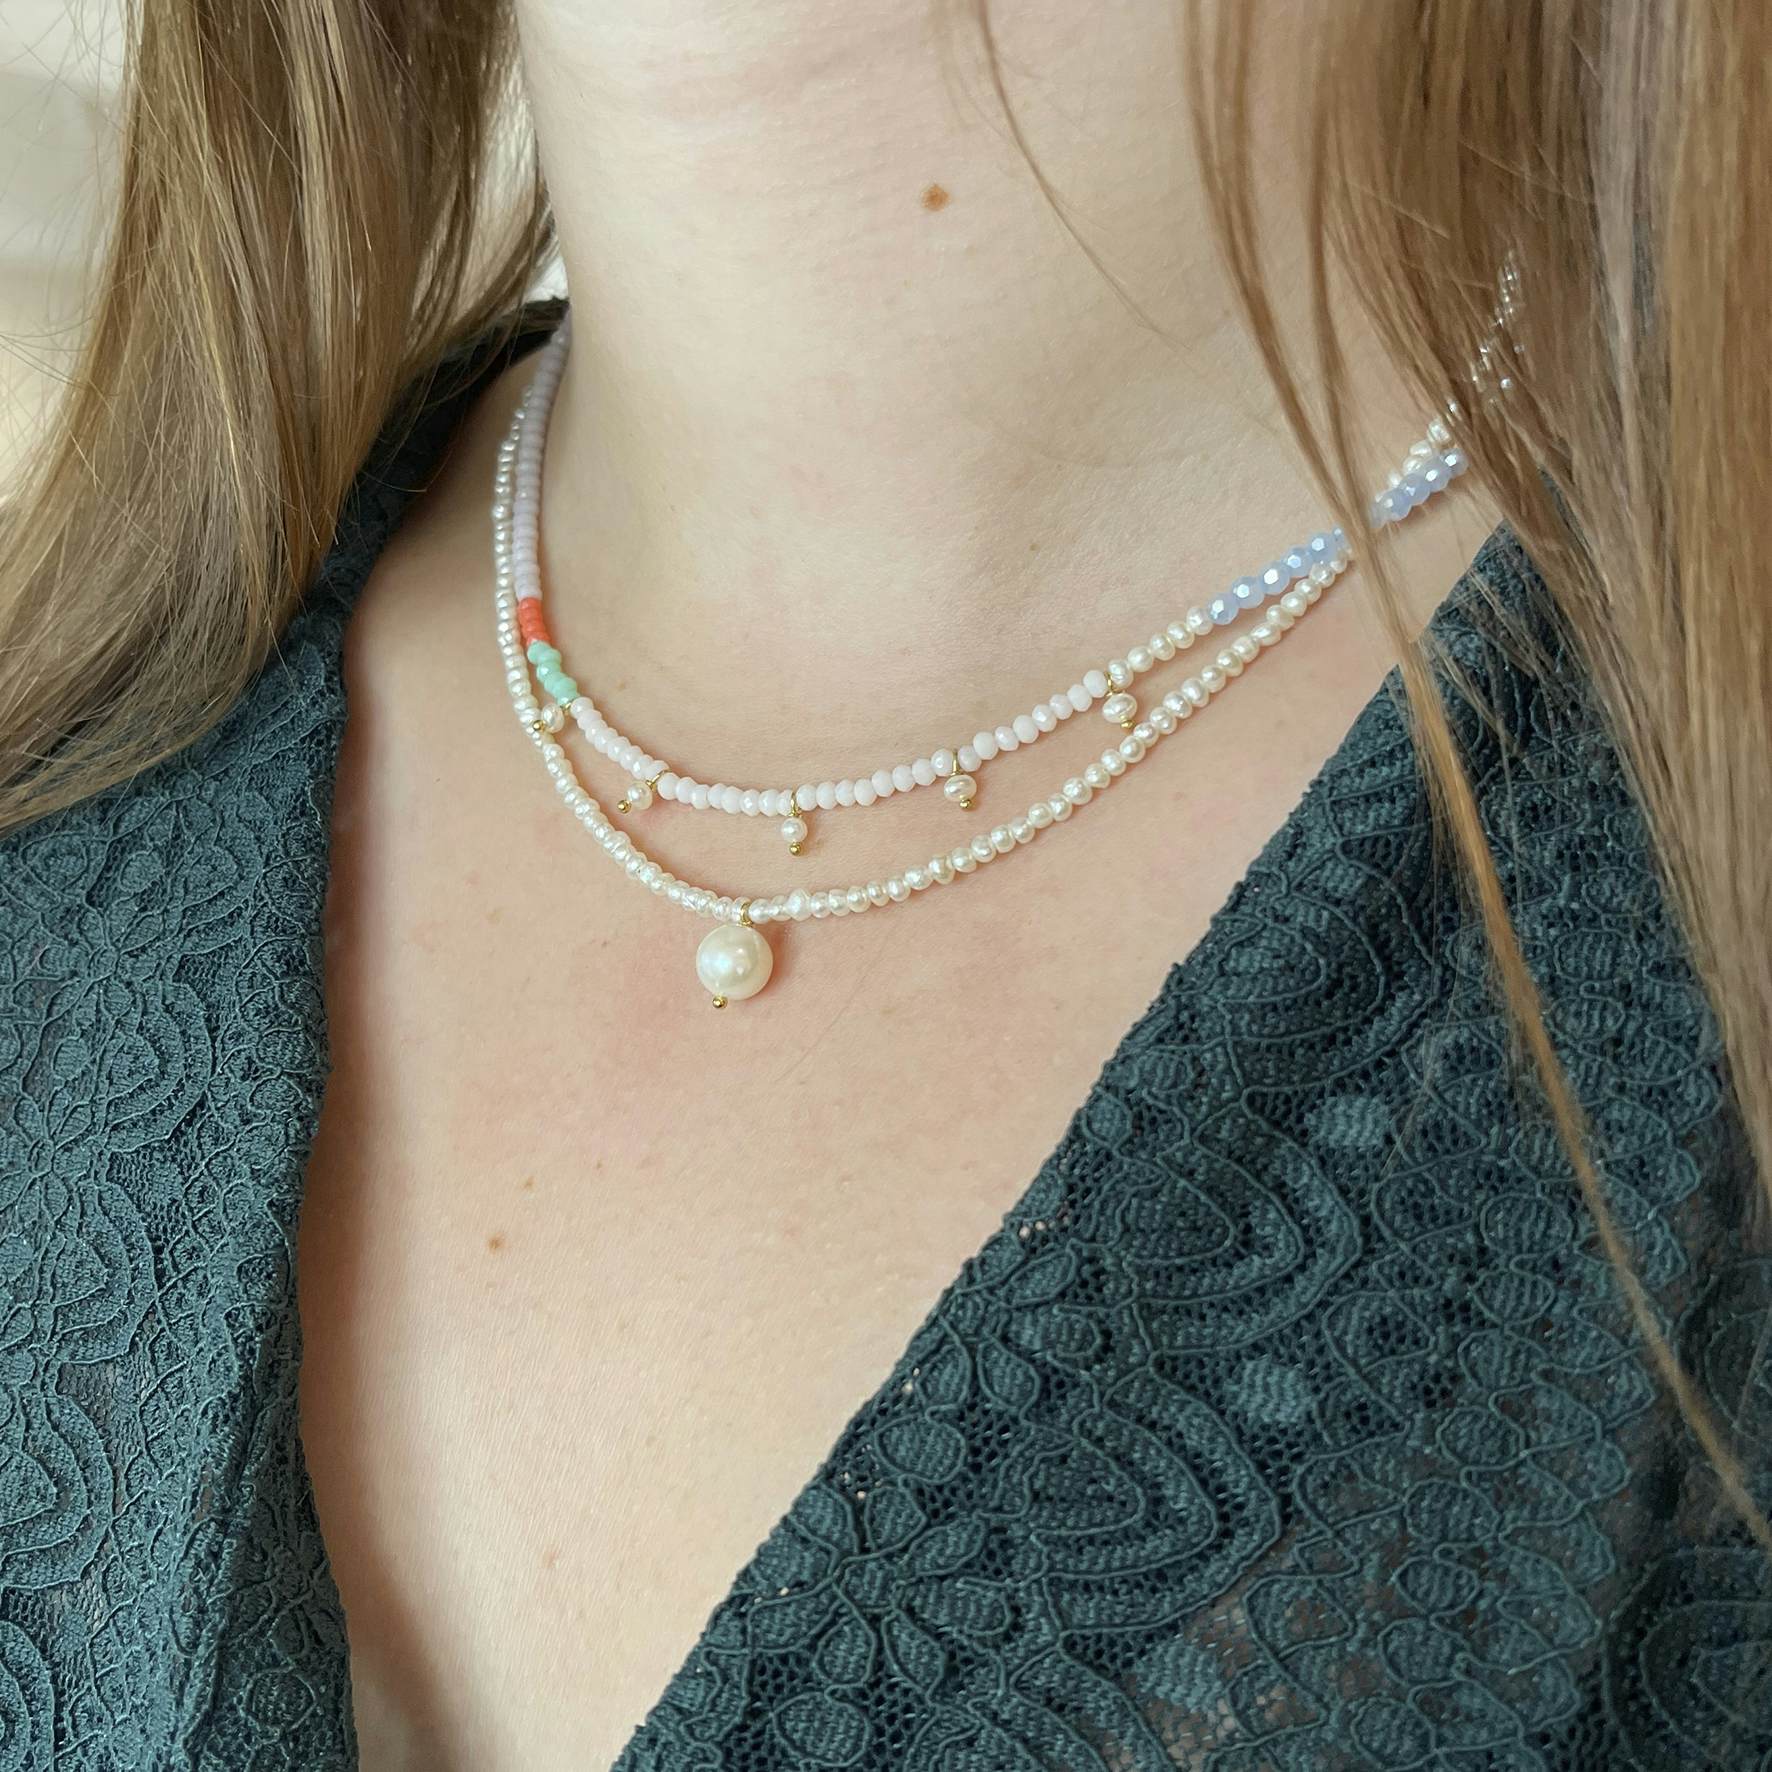 Heavenly Pearl Dream Necklace Classy von STINE A Jewelry in Vergoldet-Silber Sterling 925